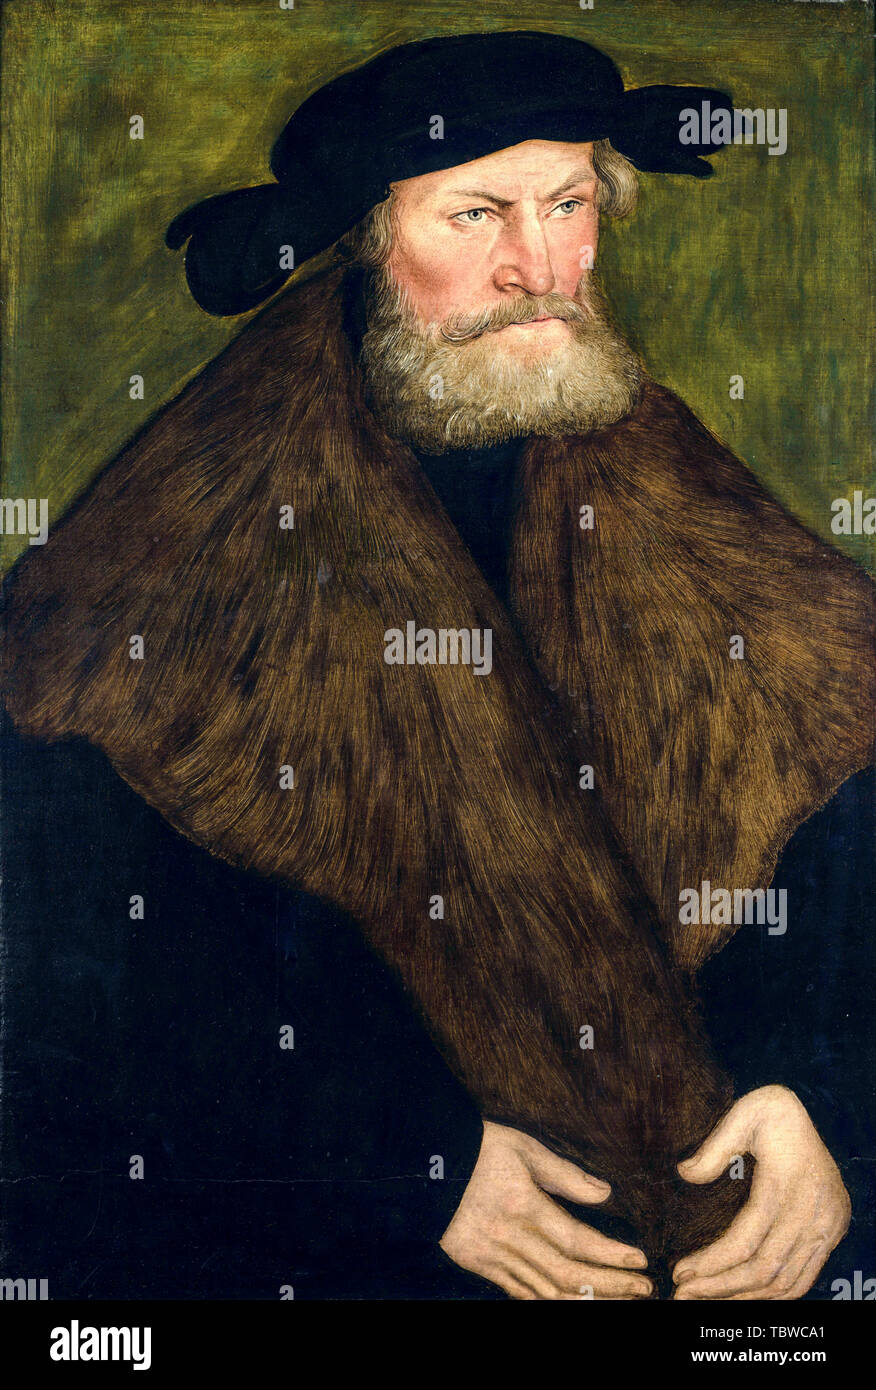 Lucas Cranach the Elder, Duke Henry IV, the Devout of Saxony, portrait painting, 1528 Stock Photo